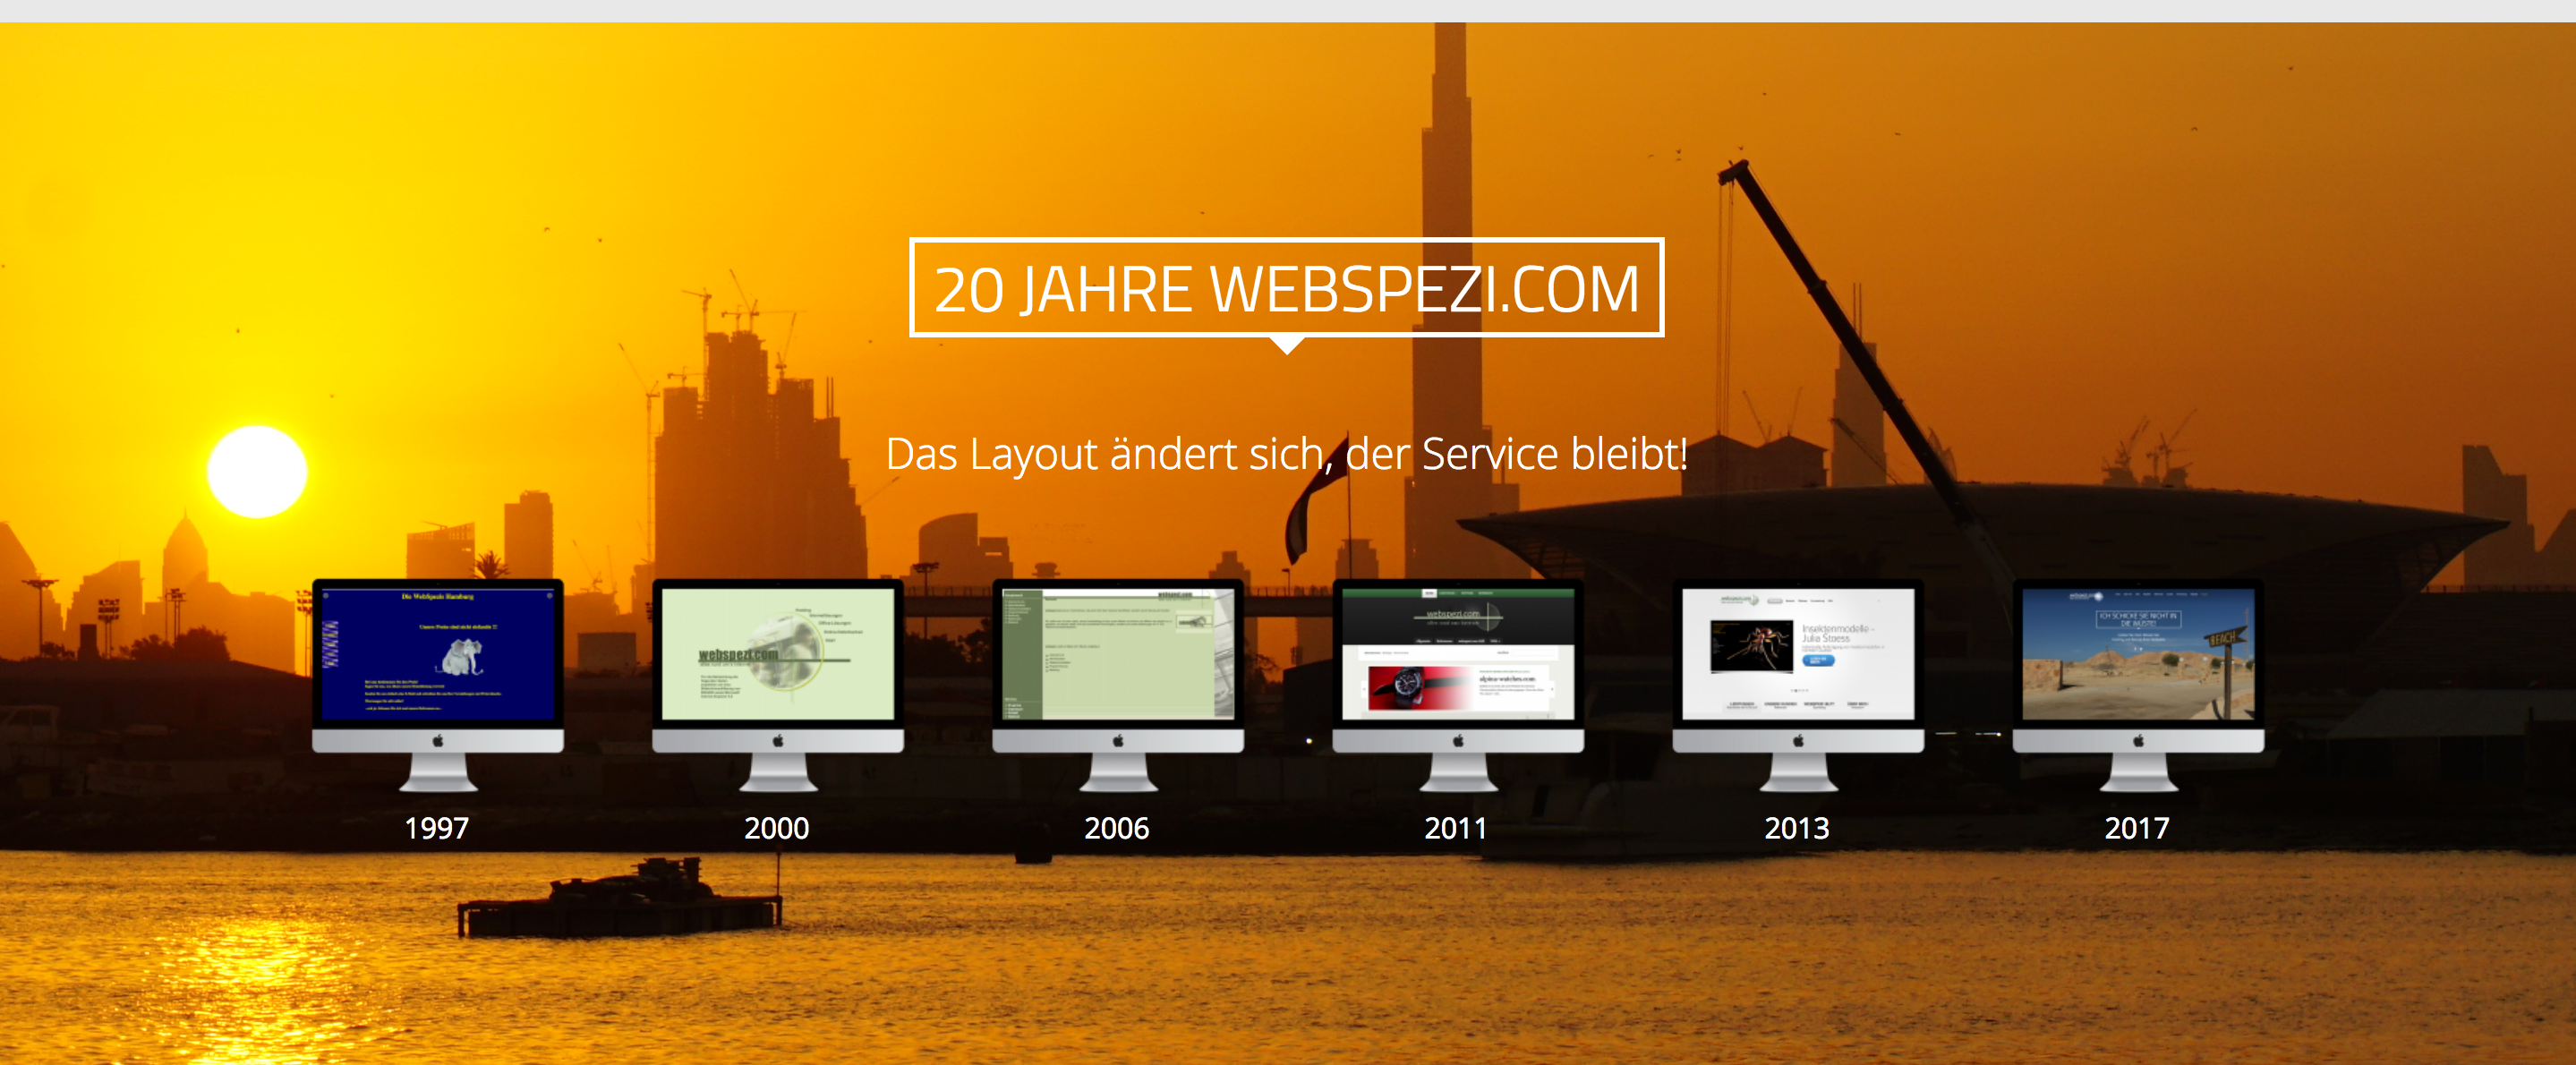 (c) Webspezi.com